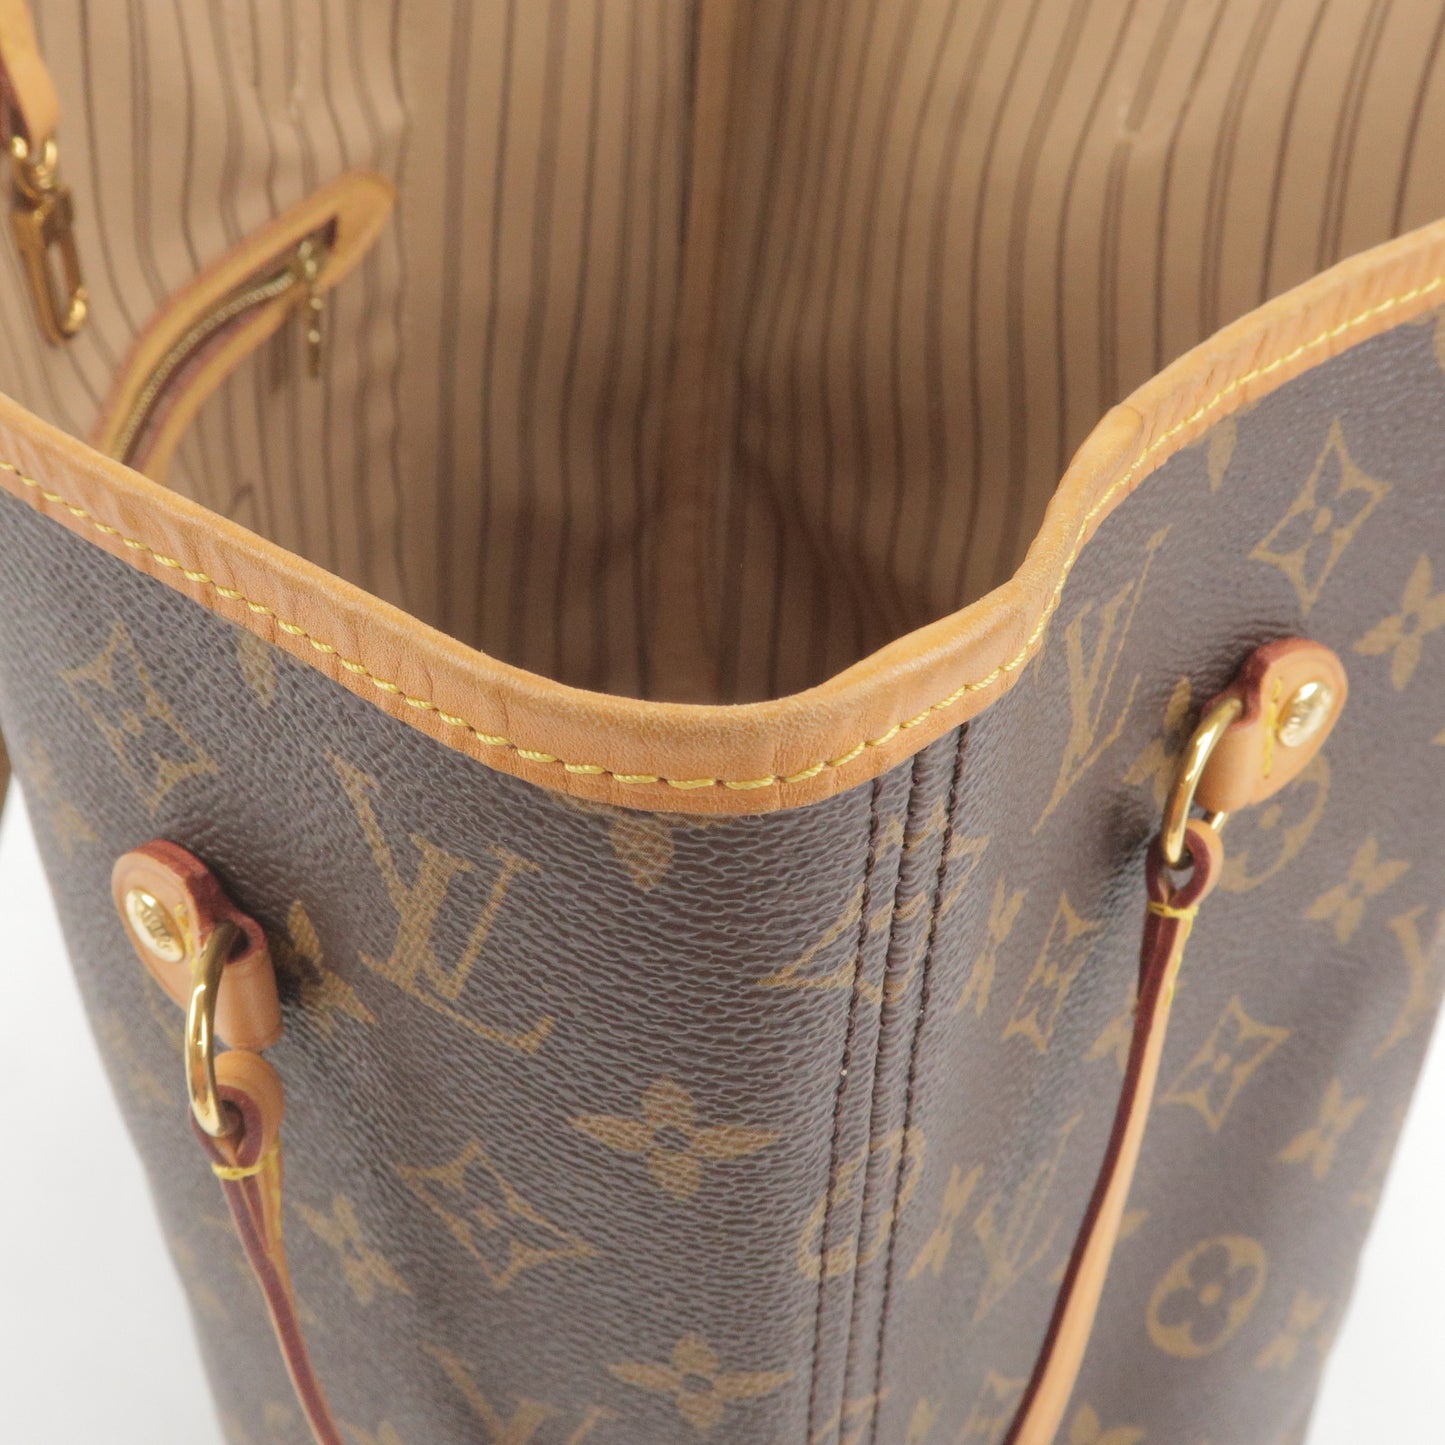 Louis-Vuitton-Monogram-Neverfull-MM-Tote-Bag-Hand-Bag-M40995 – dct